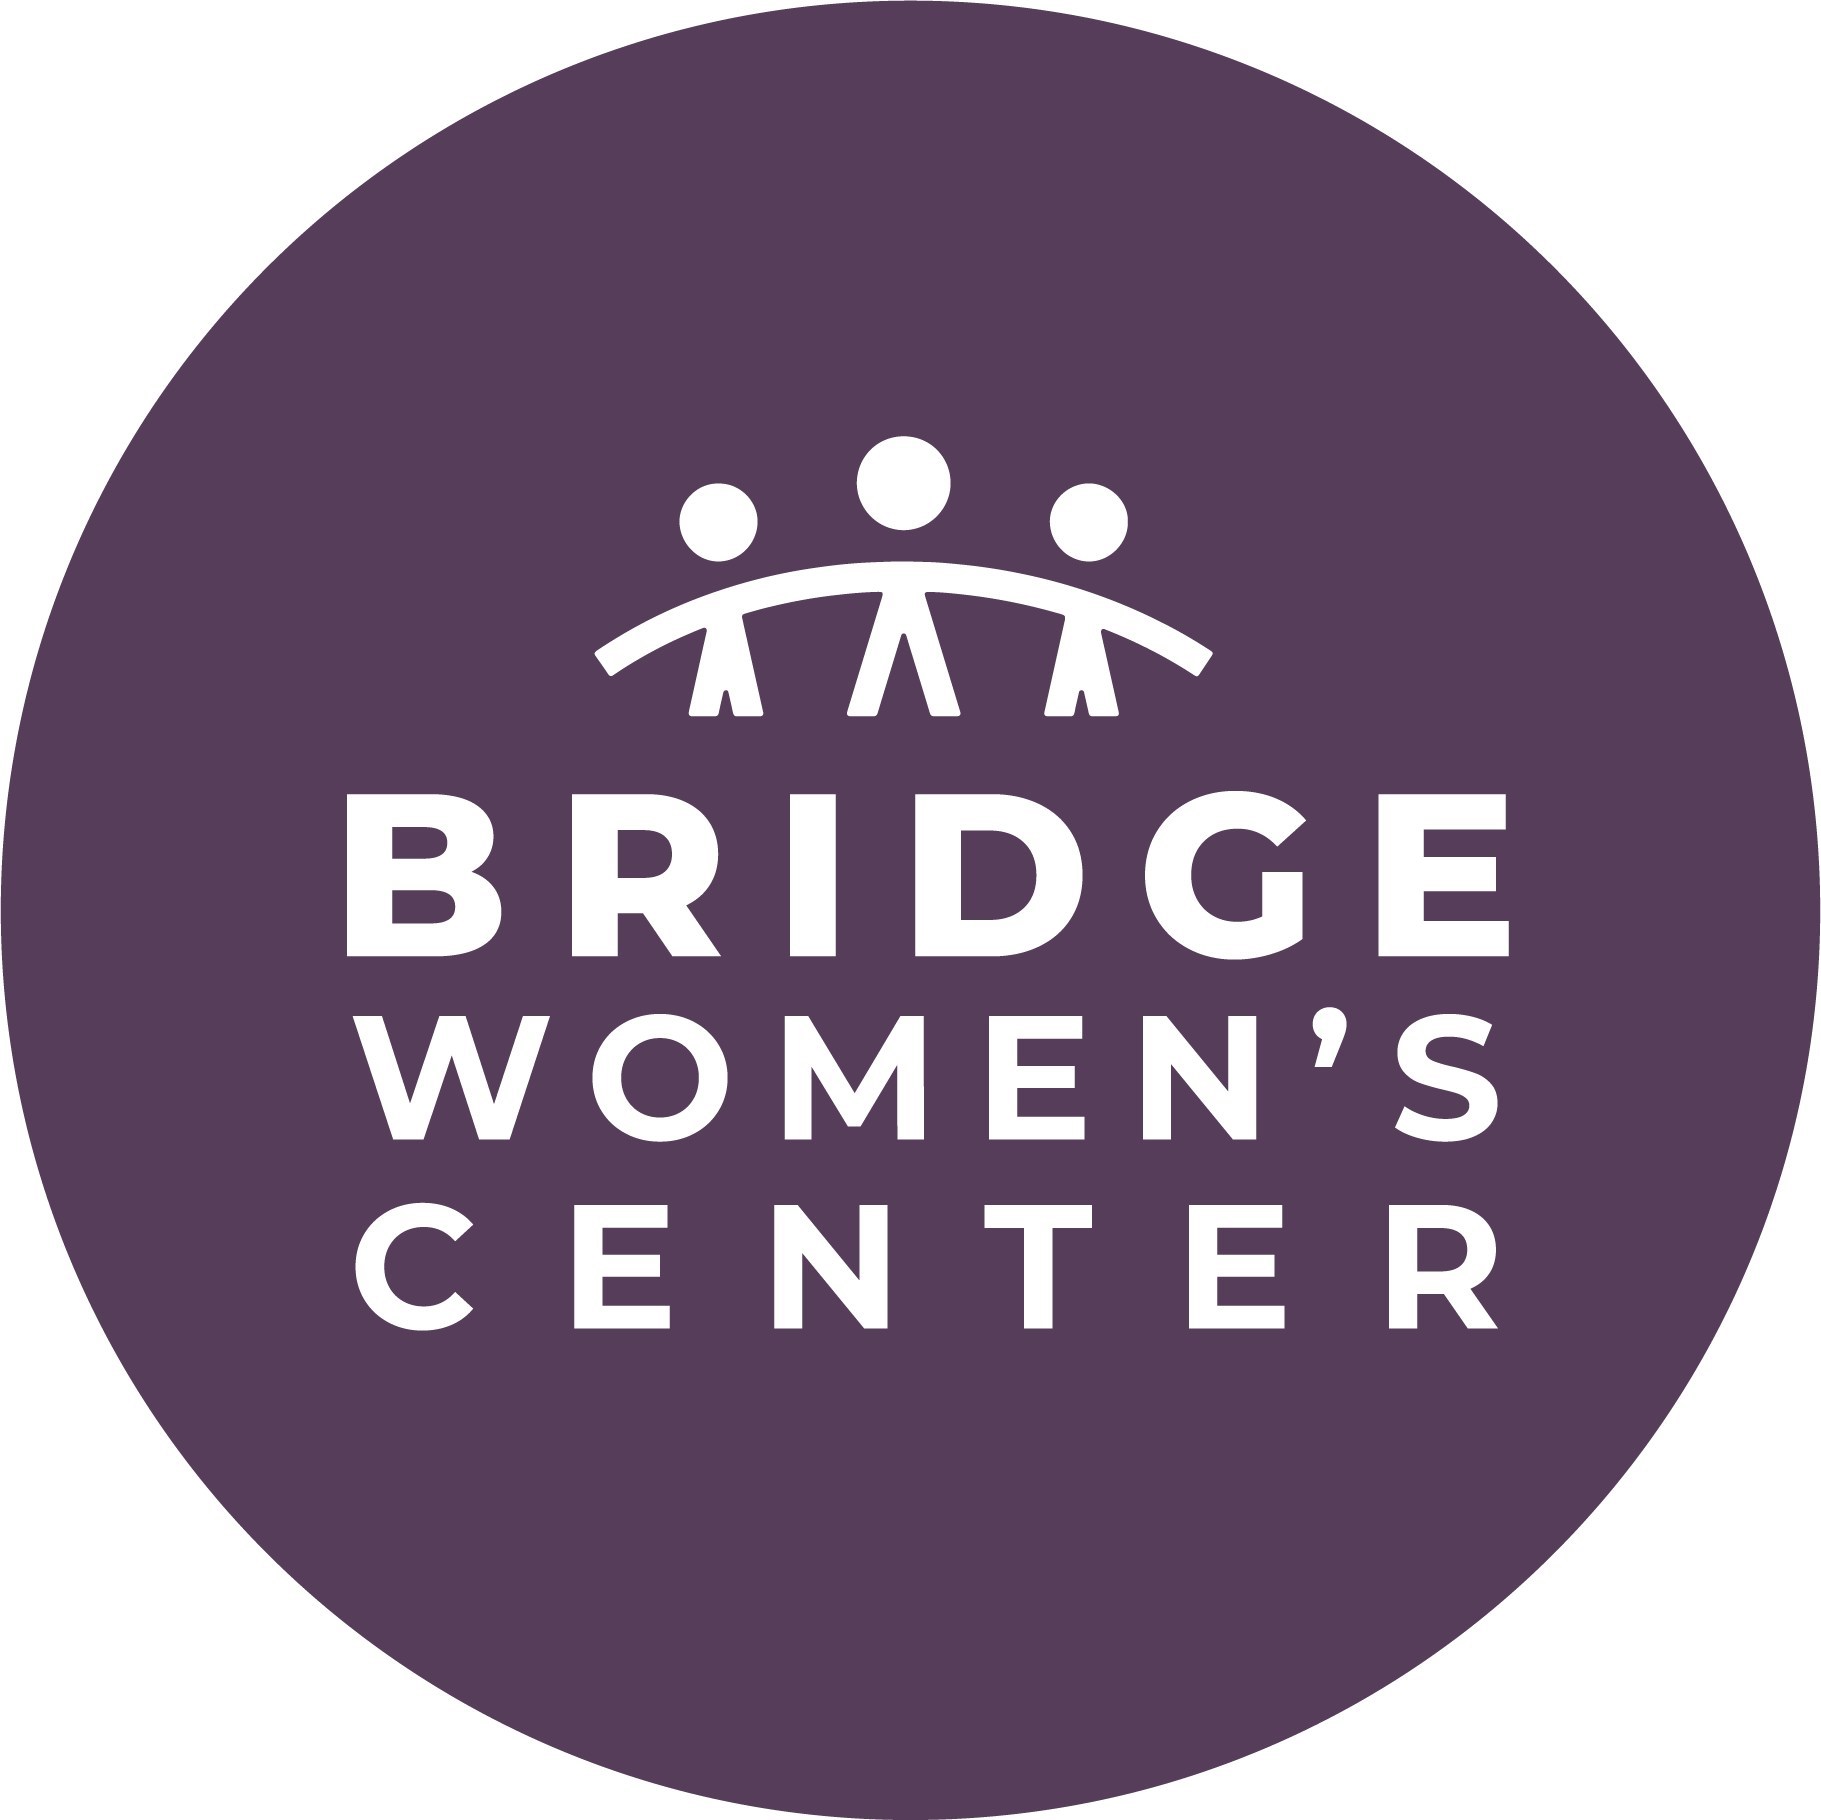 Bridge Women's Center to Hold 1st Annual Gala with Keynote Speaker Abby Johnson